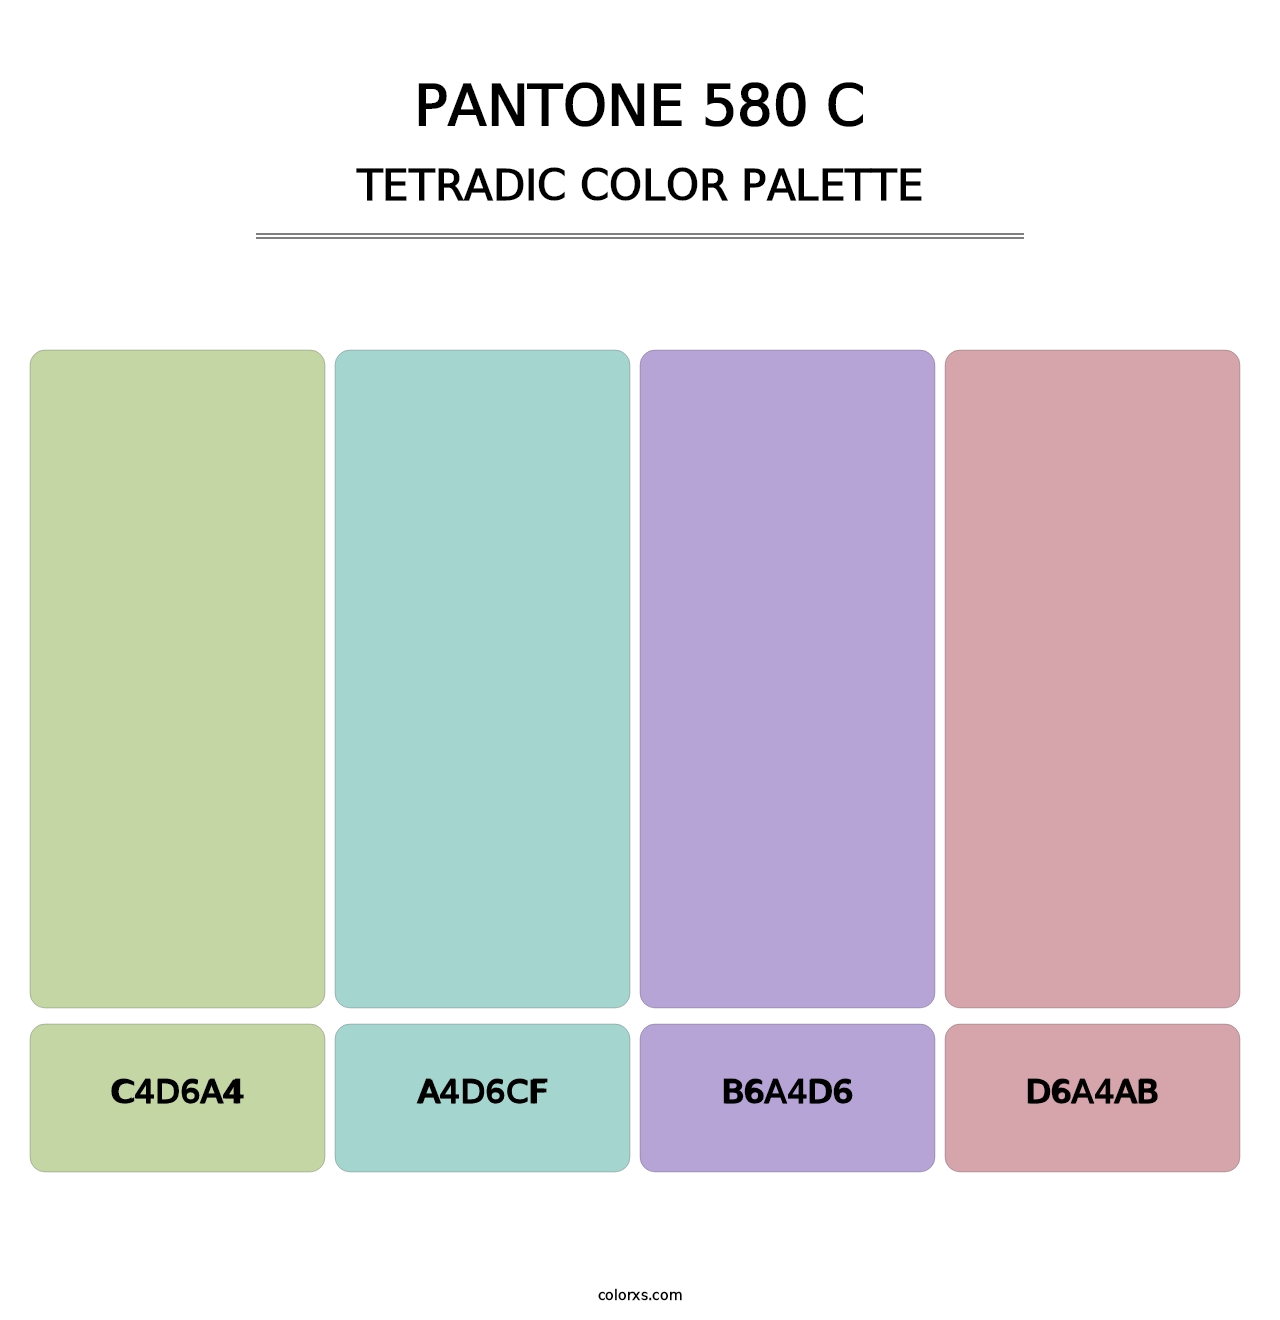 PANTONE 580 C - Tetradic Color Palette